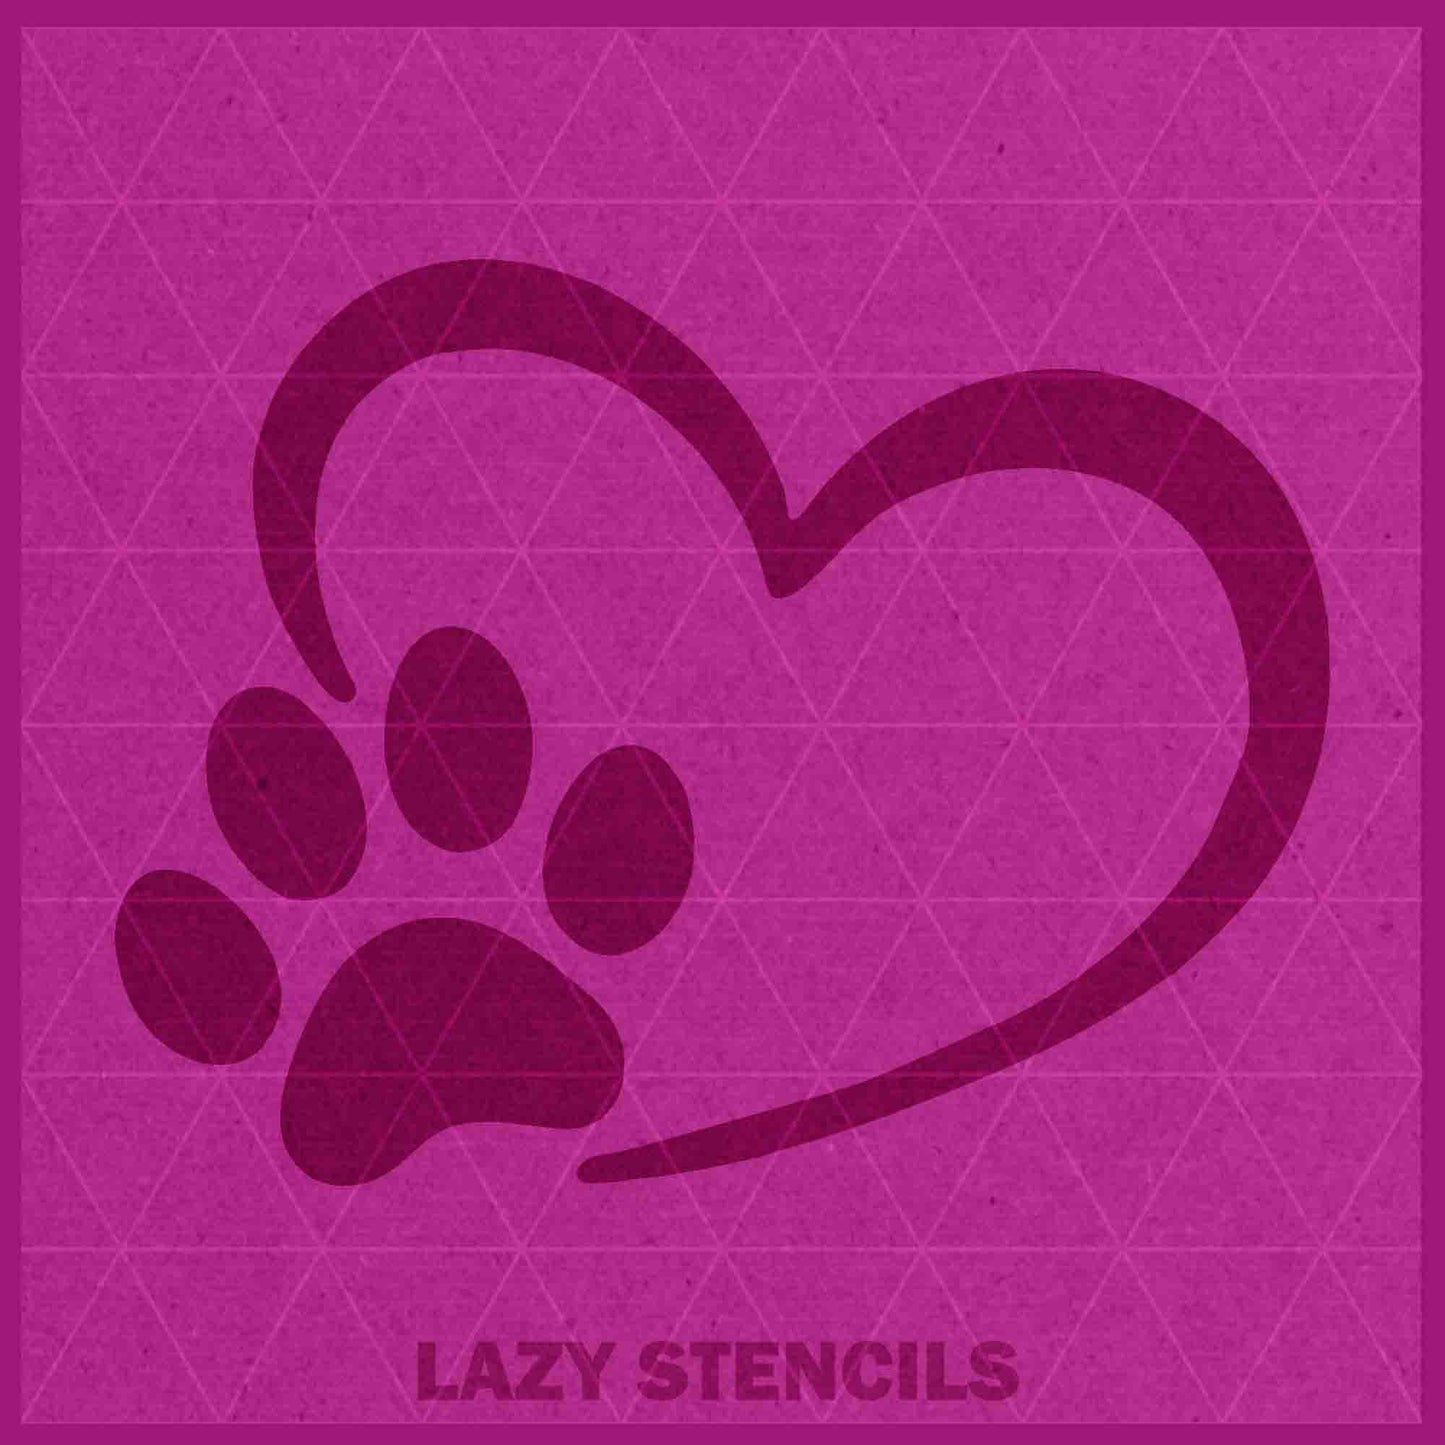 PAW STENCIL - Lazy Stencils